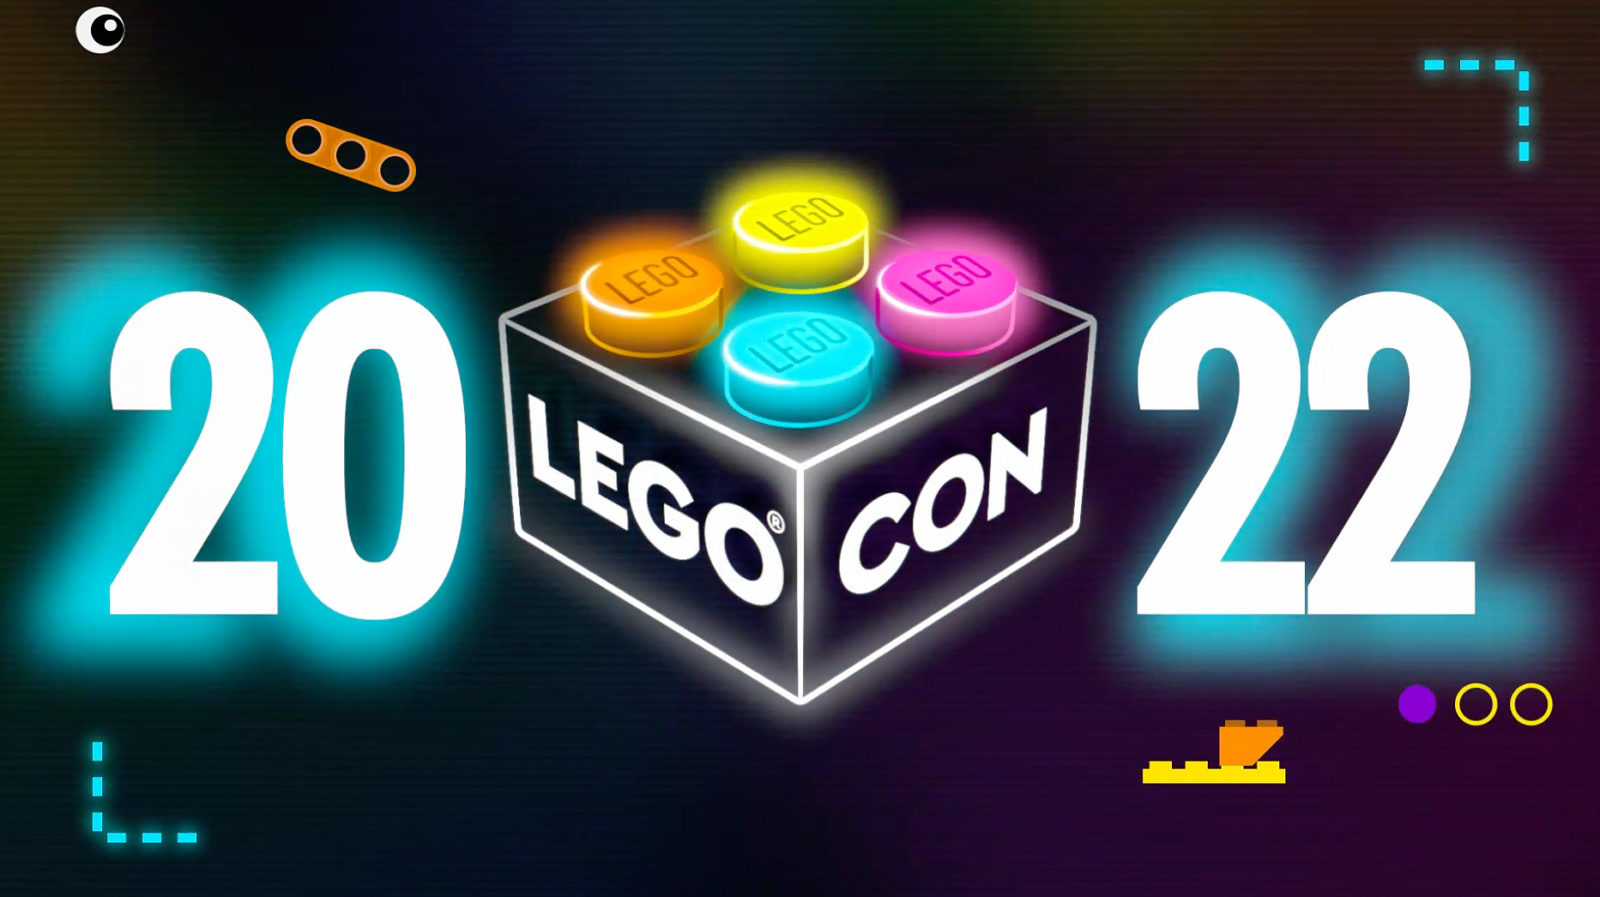 LEGO CON 2022: Convenția online LEGO revine pe 18 iunie 2022